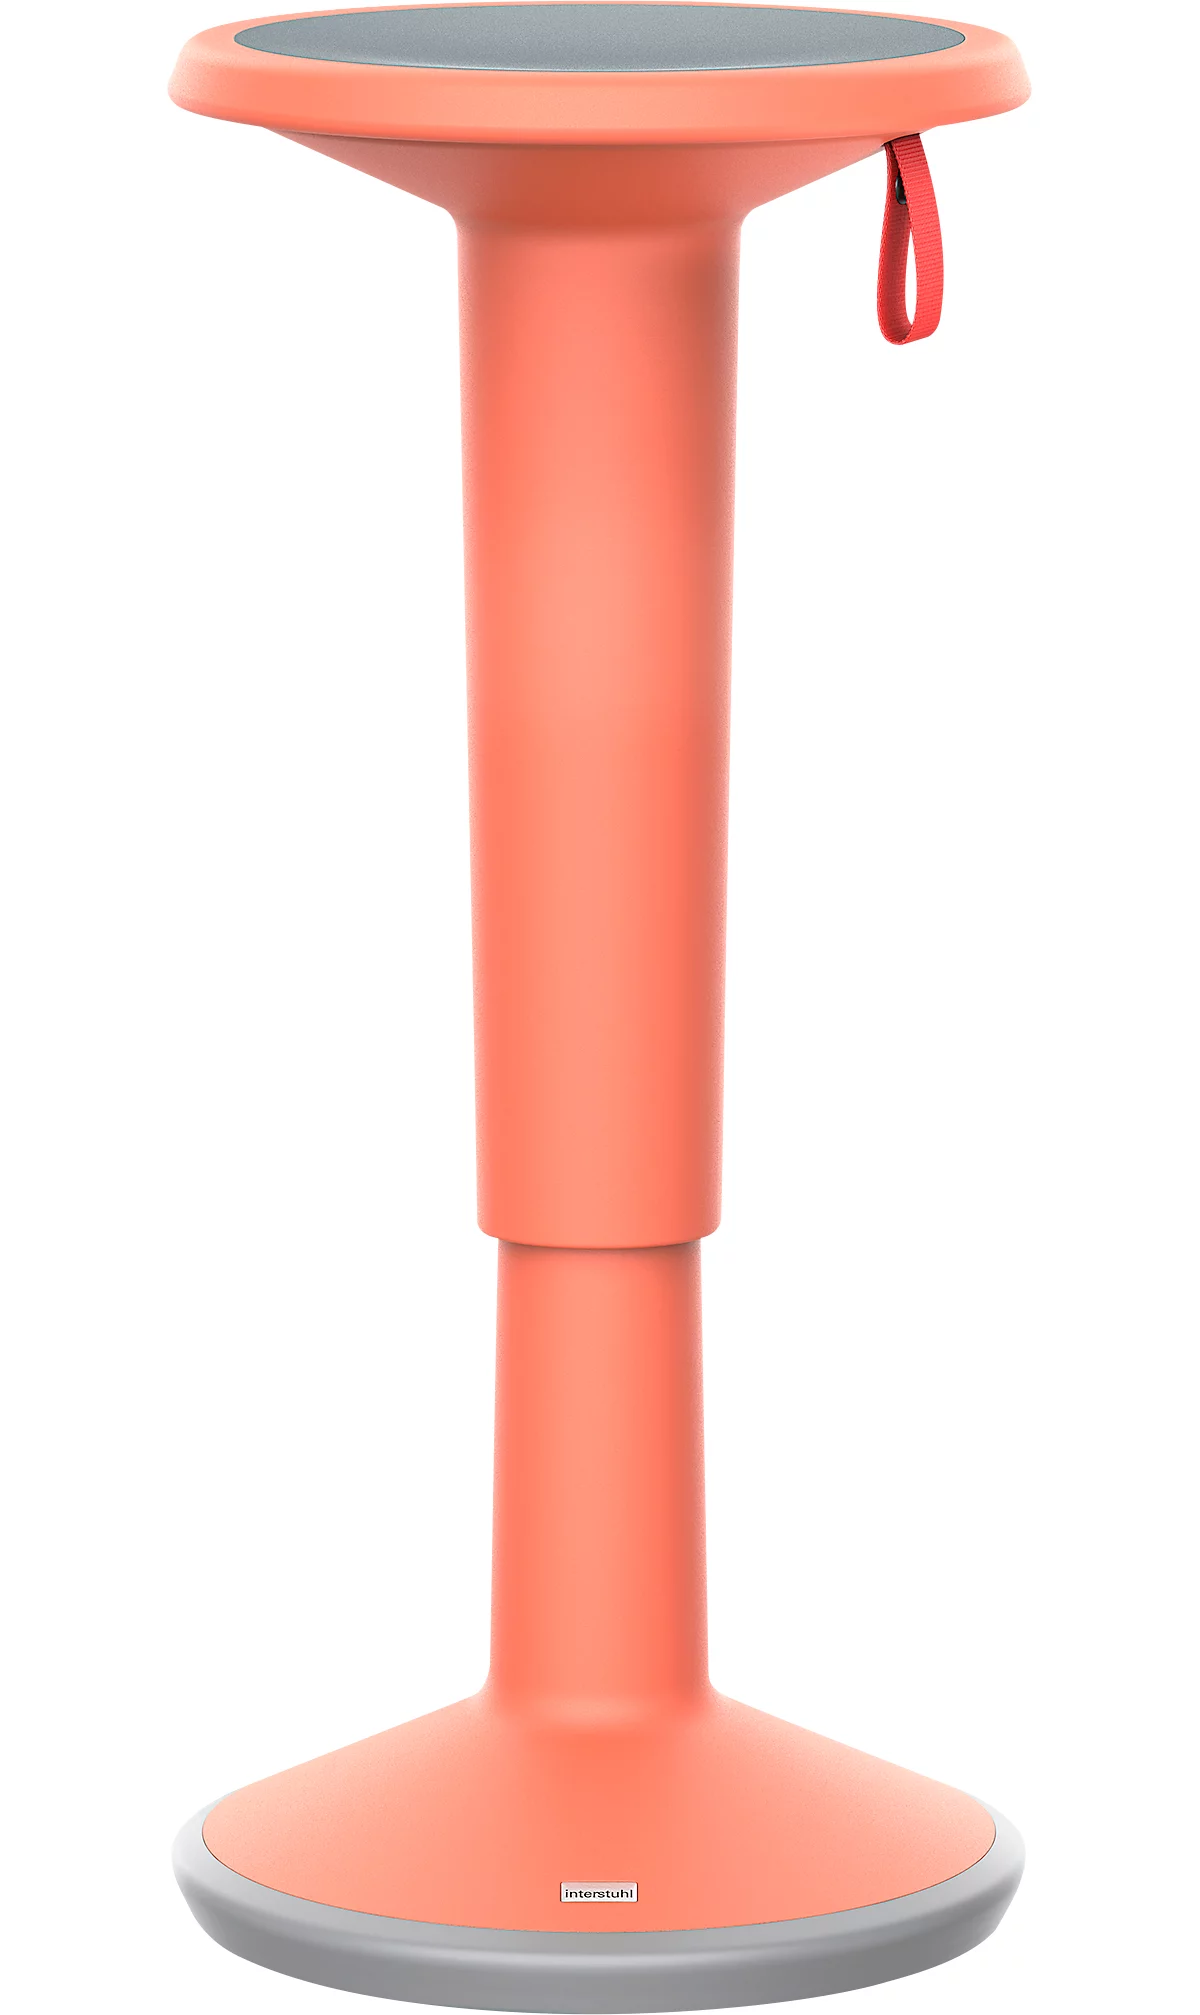 Taburete StandUP regulable en altura, Ø 330 x H 590 - 845 mm, naranja salmón